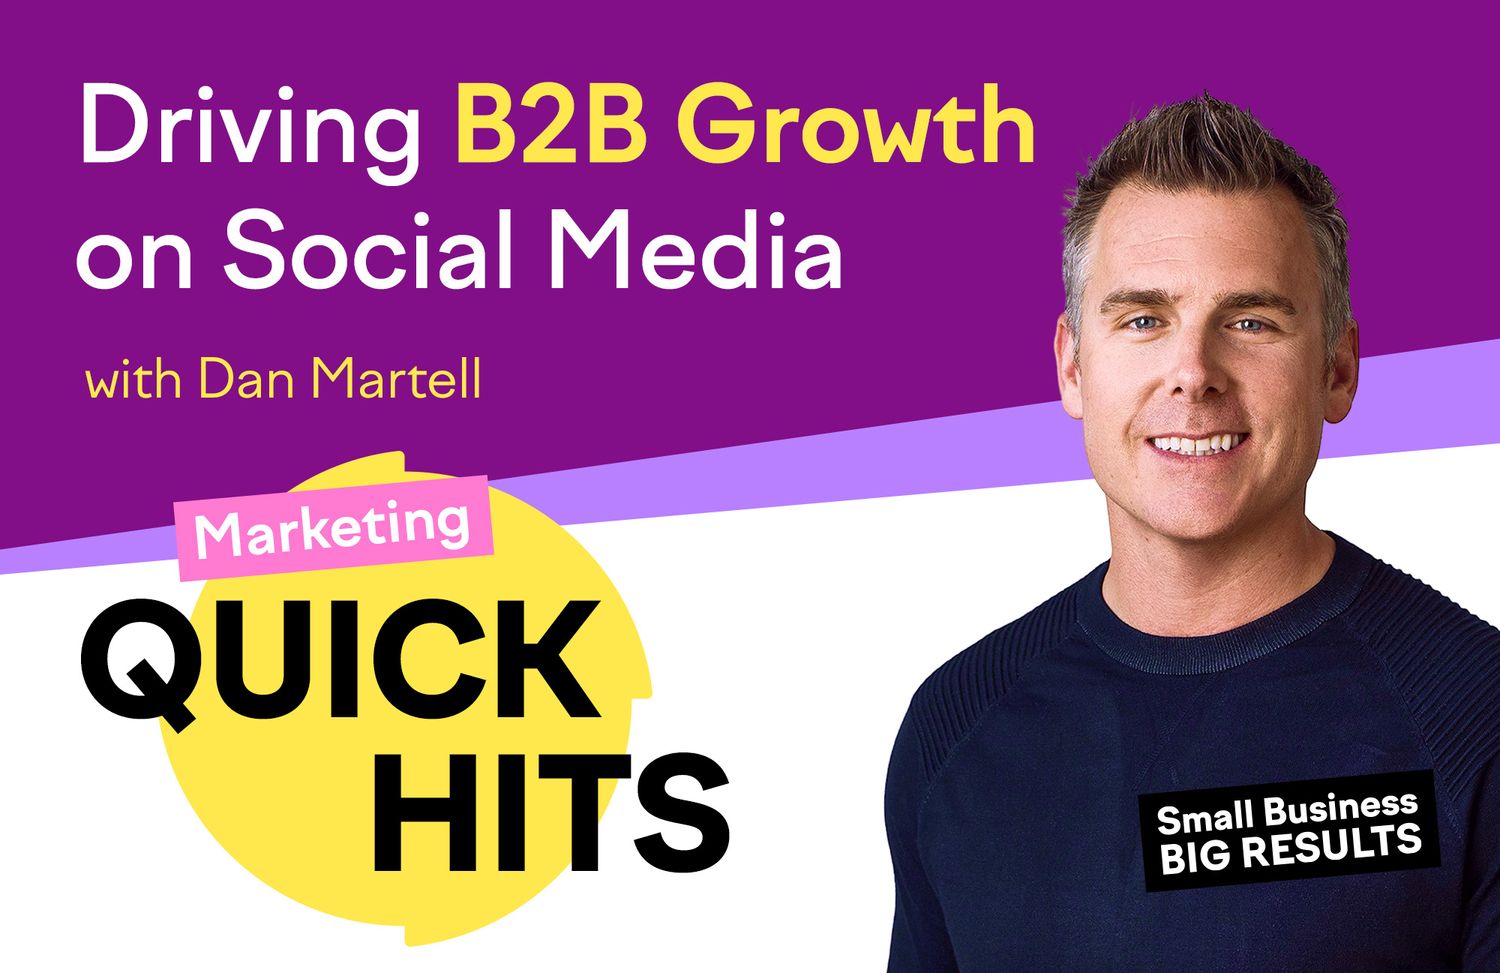 Driving B2B Growth on Social Media with Dan Martell